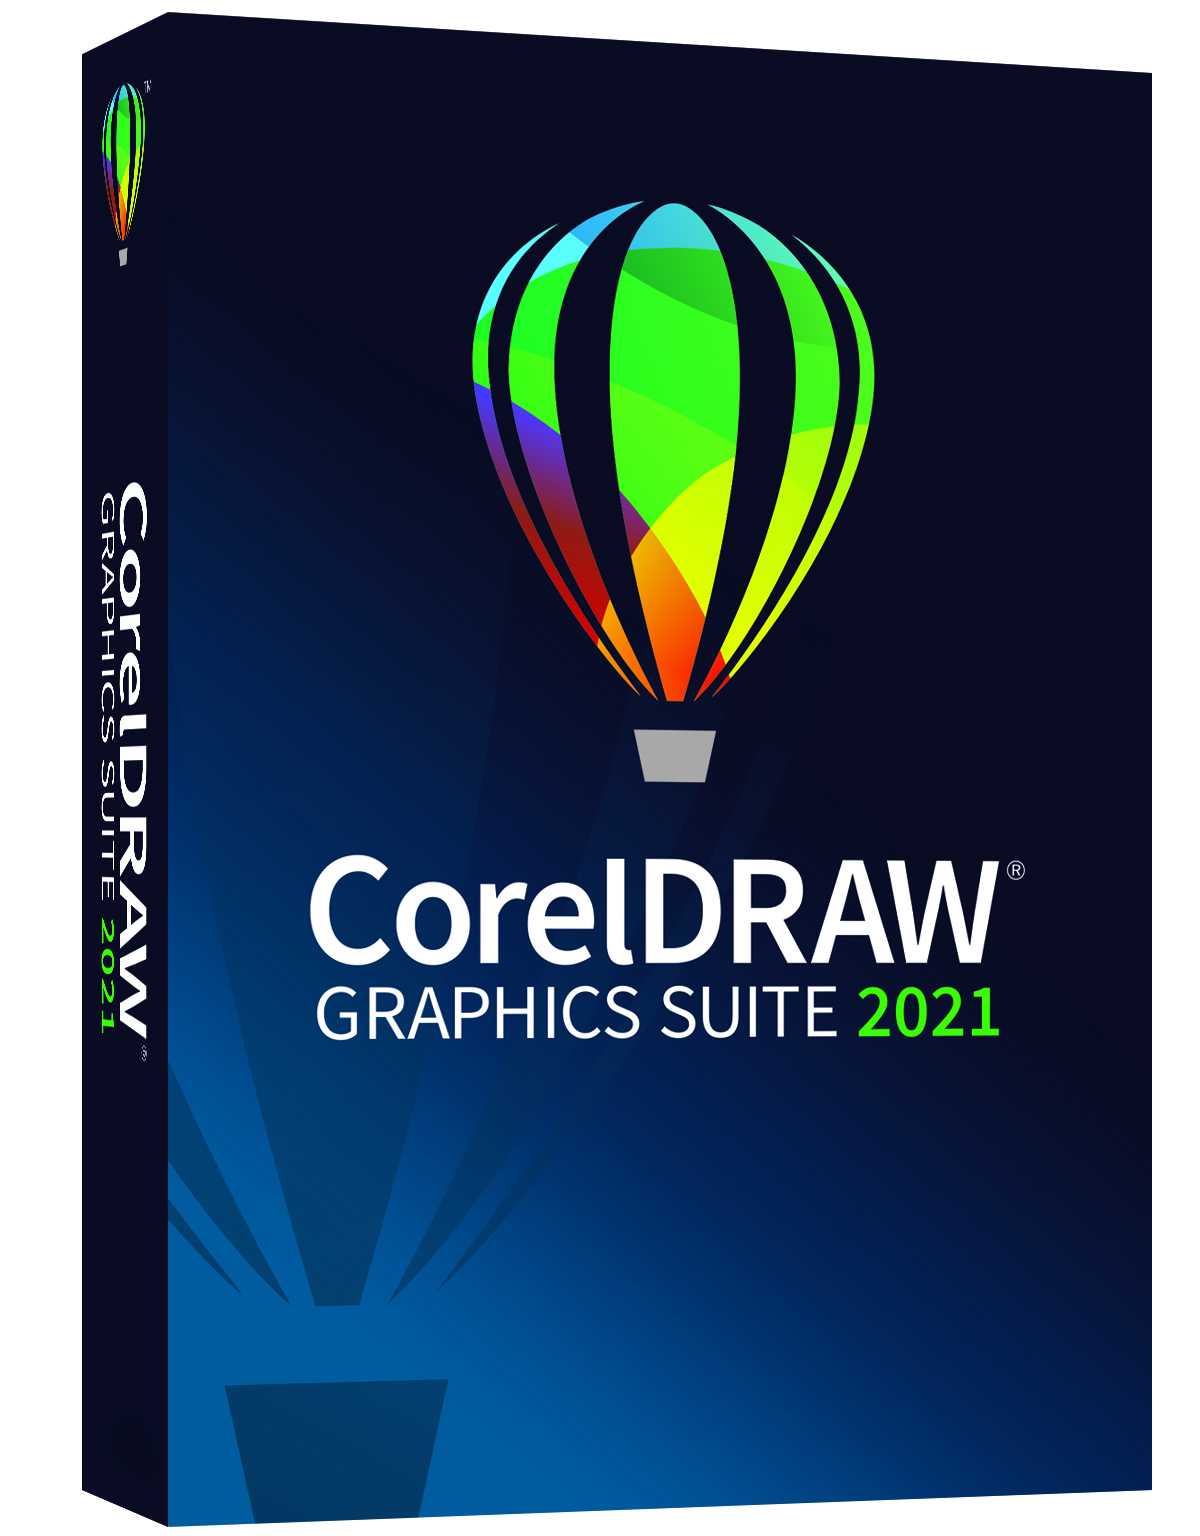 CorelDRAW Graphics Suite 2021 365-Day Windows Subscription